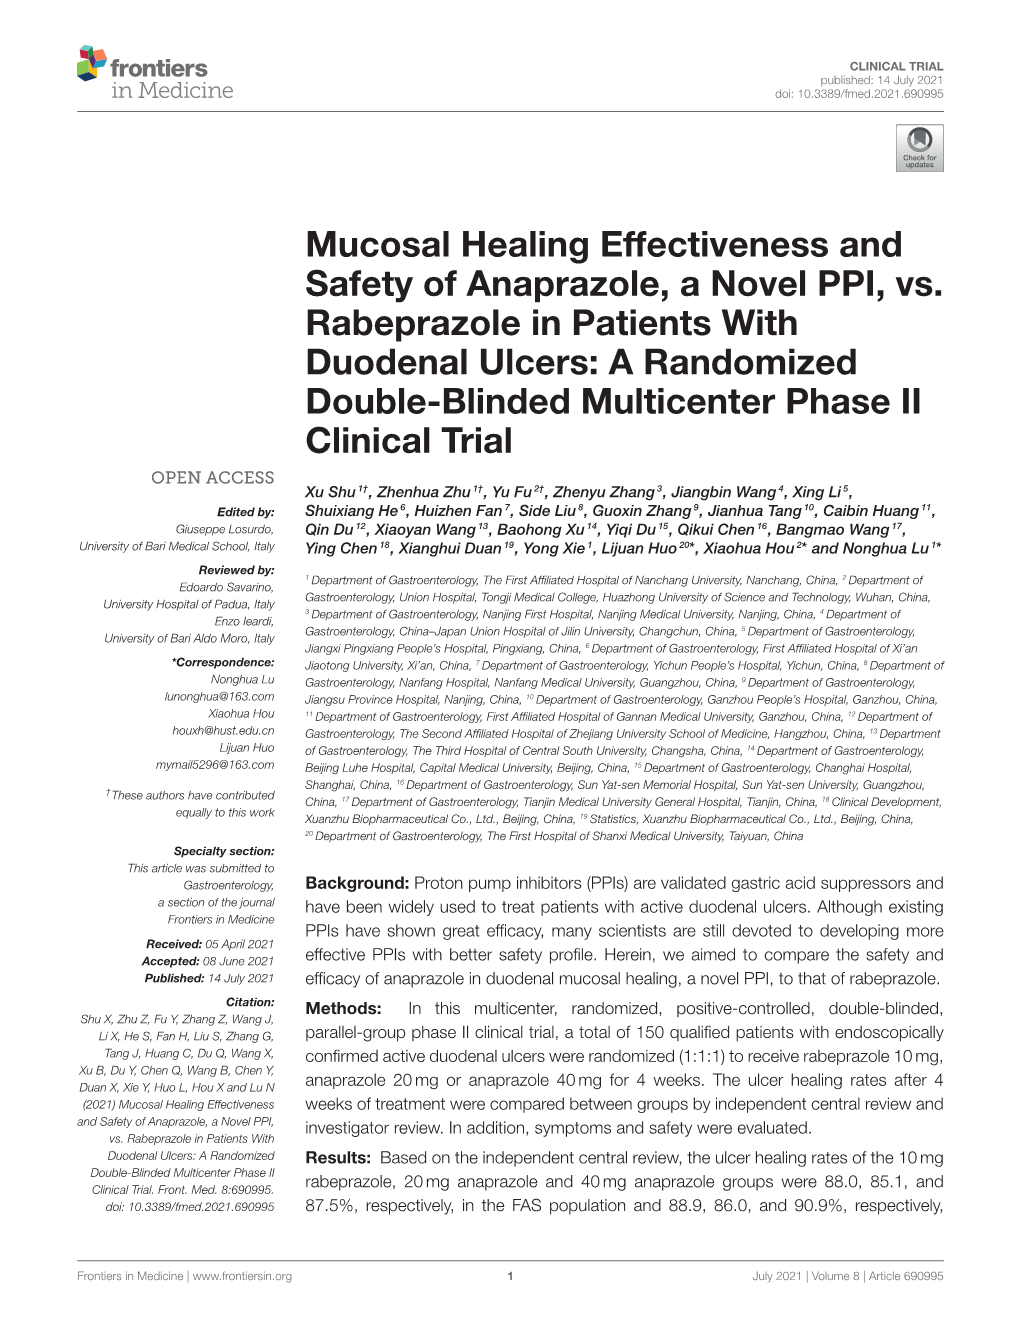 Mucosal Healing Effectiveness and Safety of Anaprazole, a Novel PPI, Vs